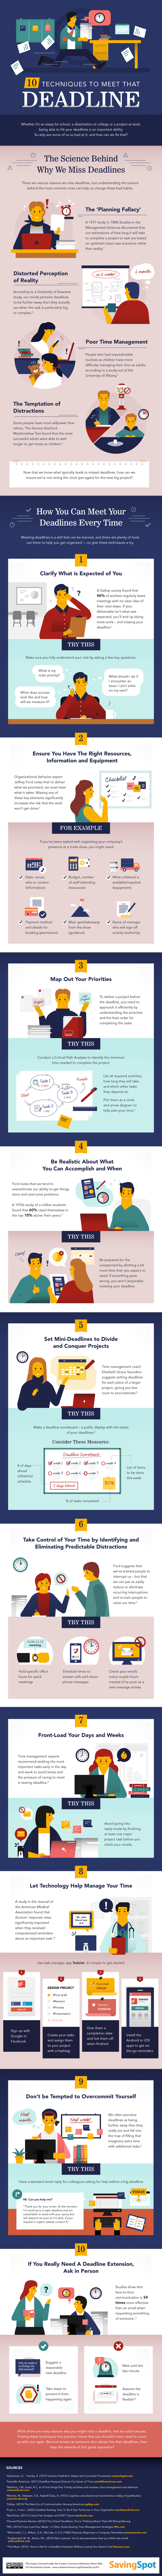 10 Techniques to Meet That Deadline Infographic